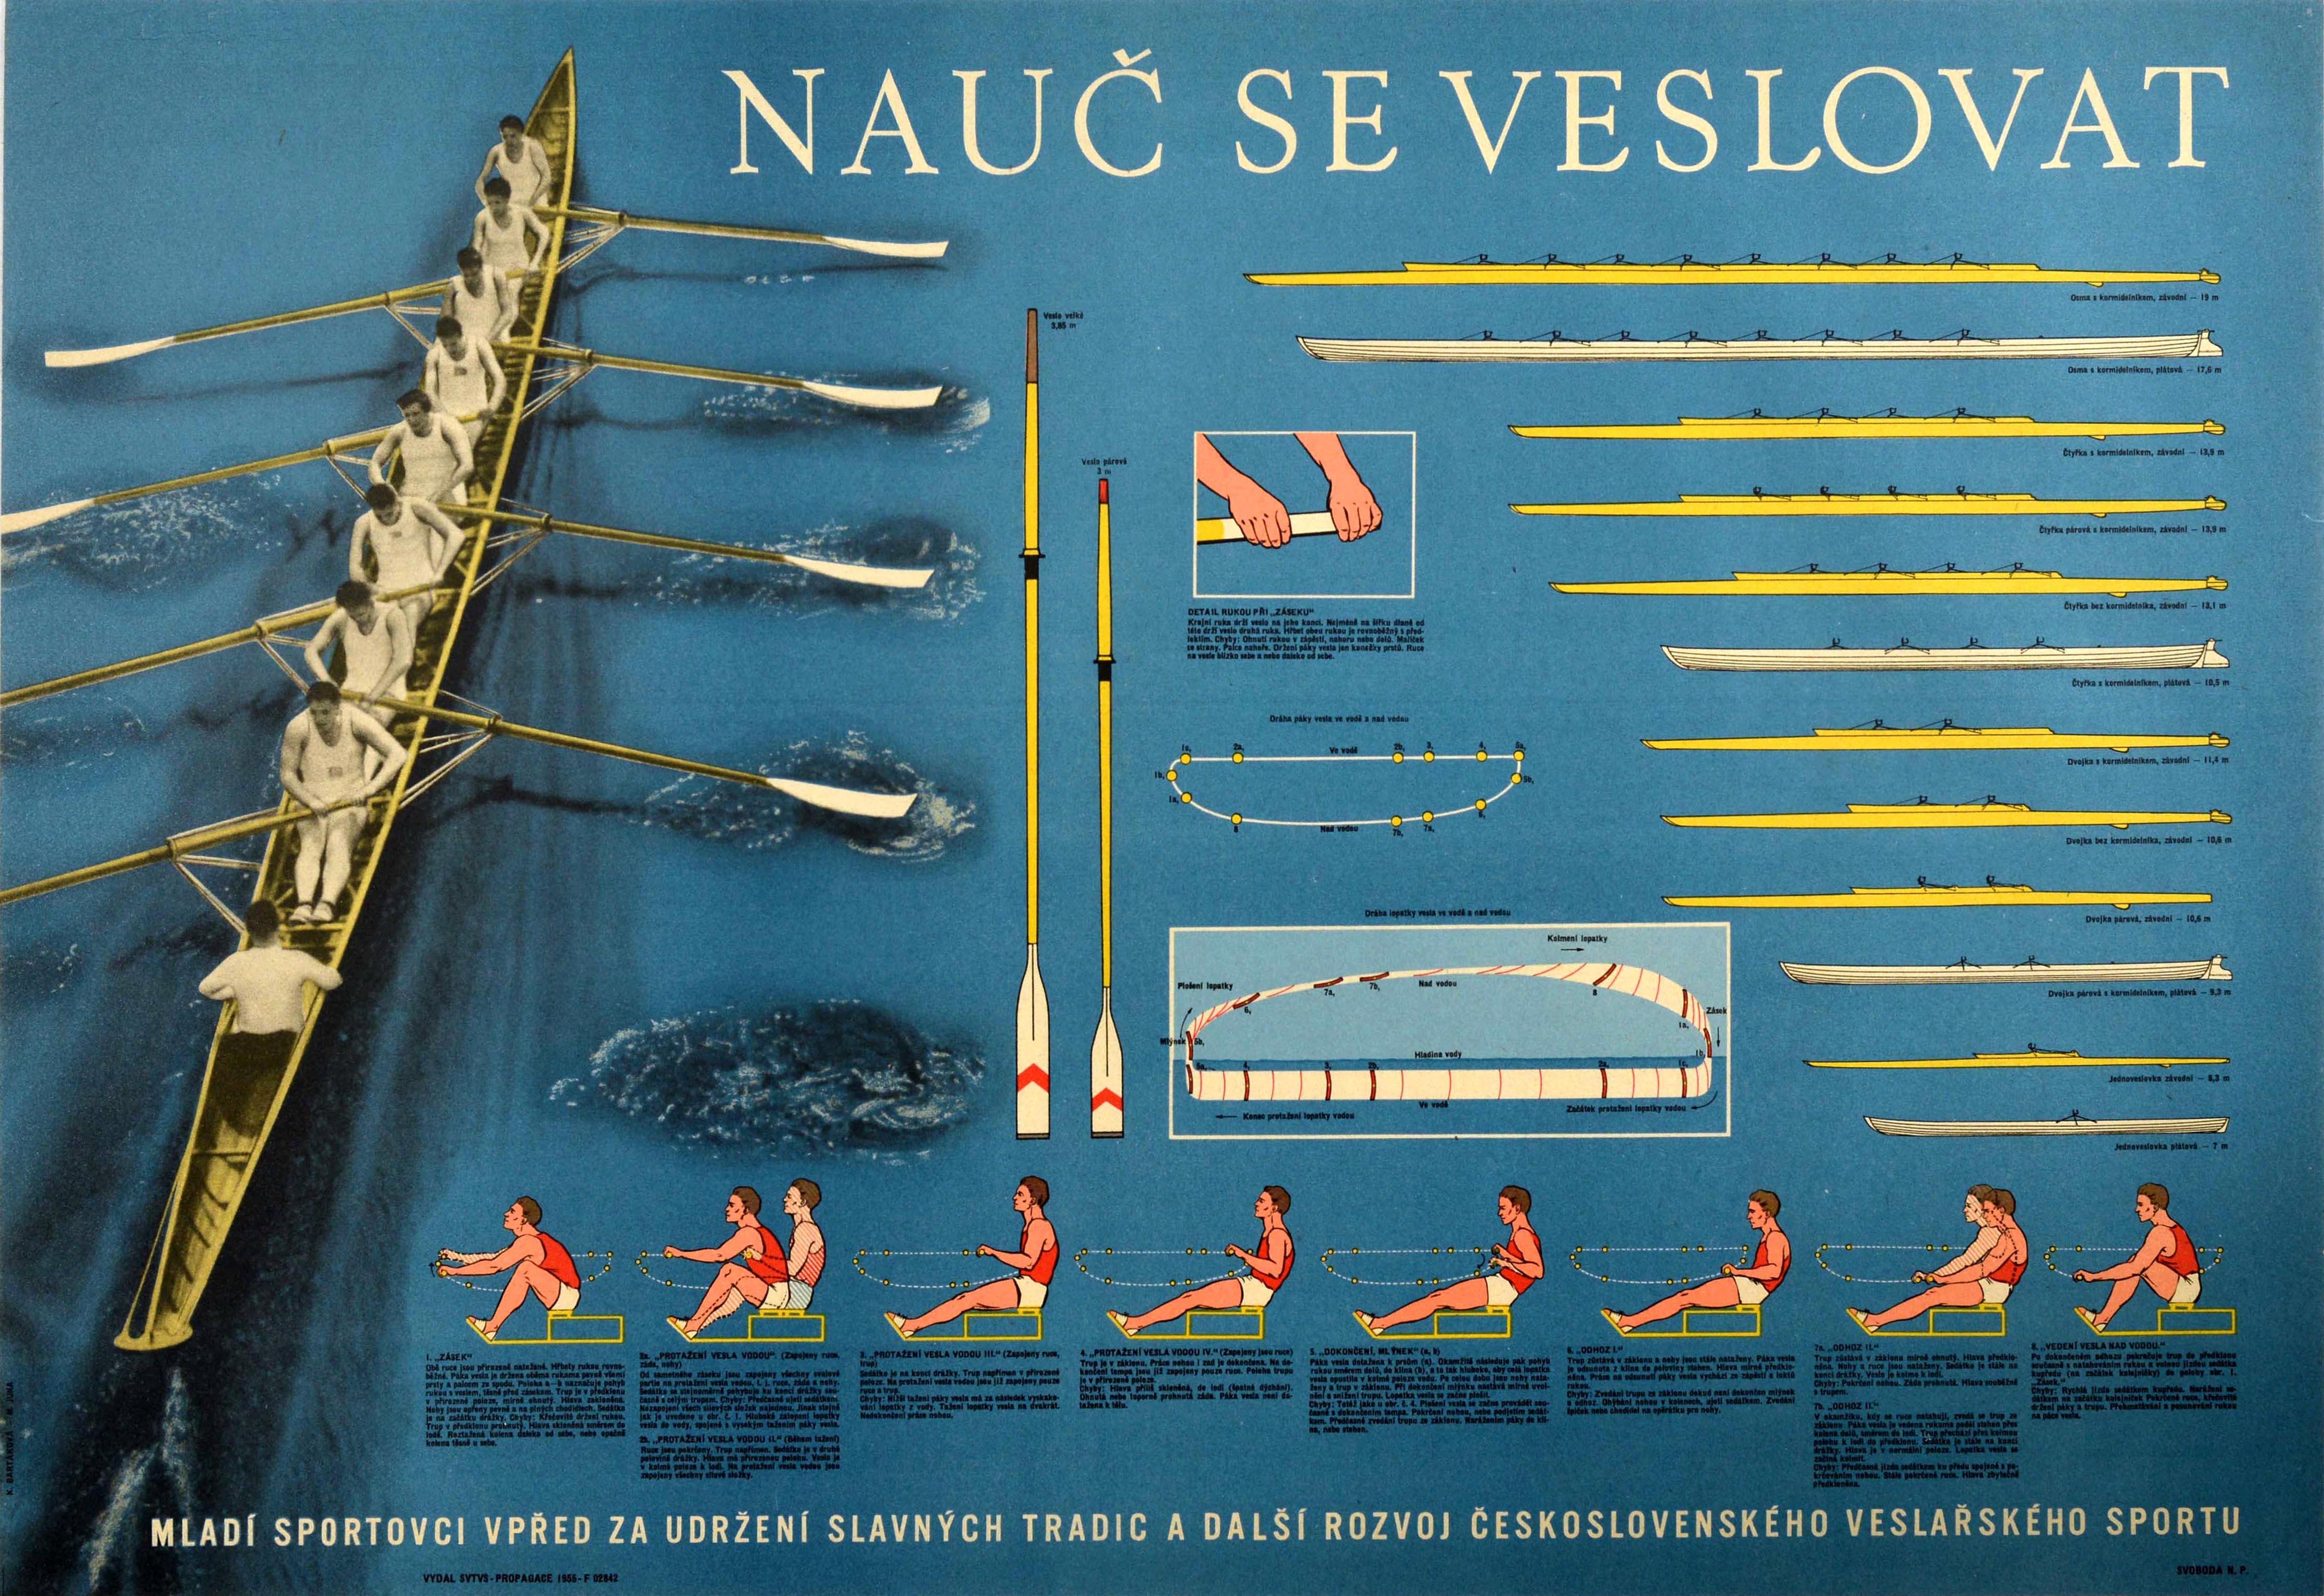 K. Bartakova, M. Juna Print - Original Vintage Poster Nauc Se Veslovat Learn To Row Sport Technique Boat Types